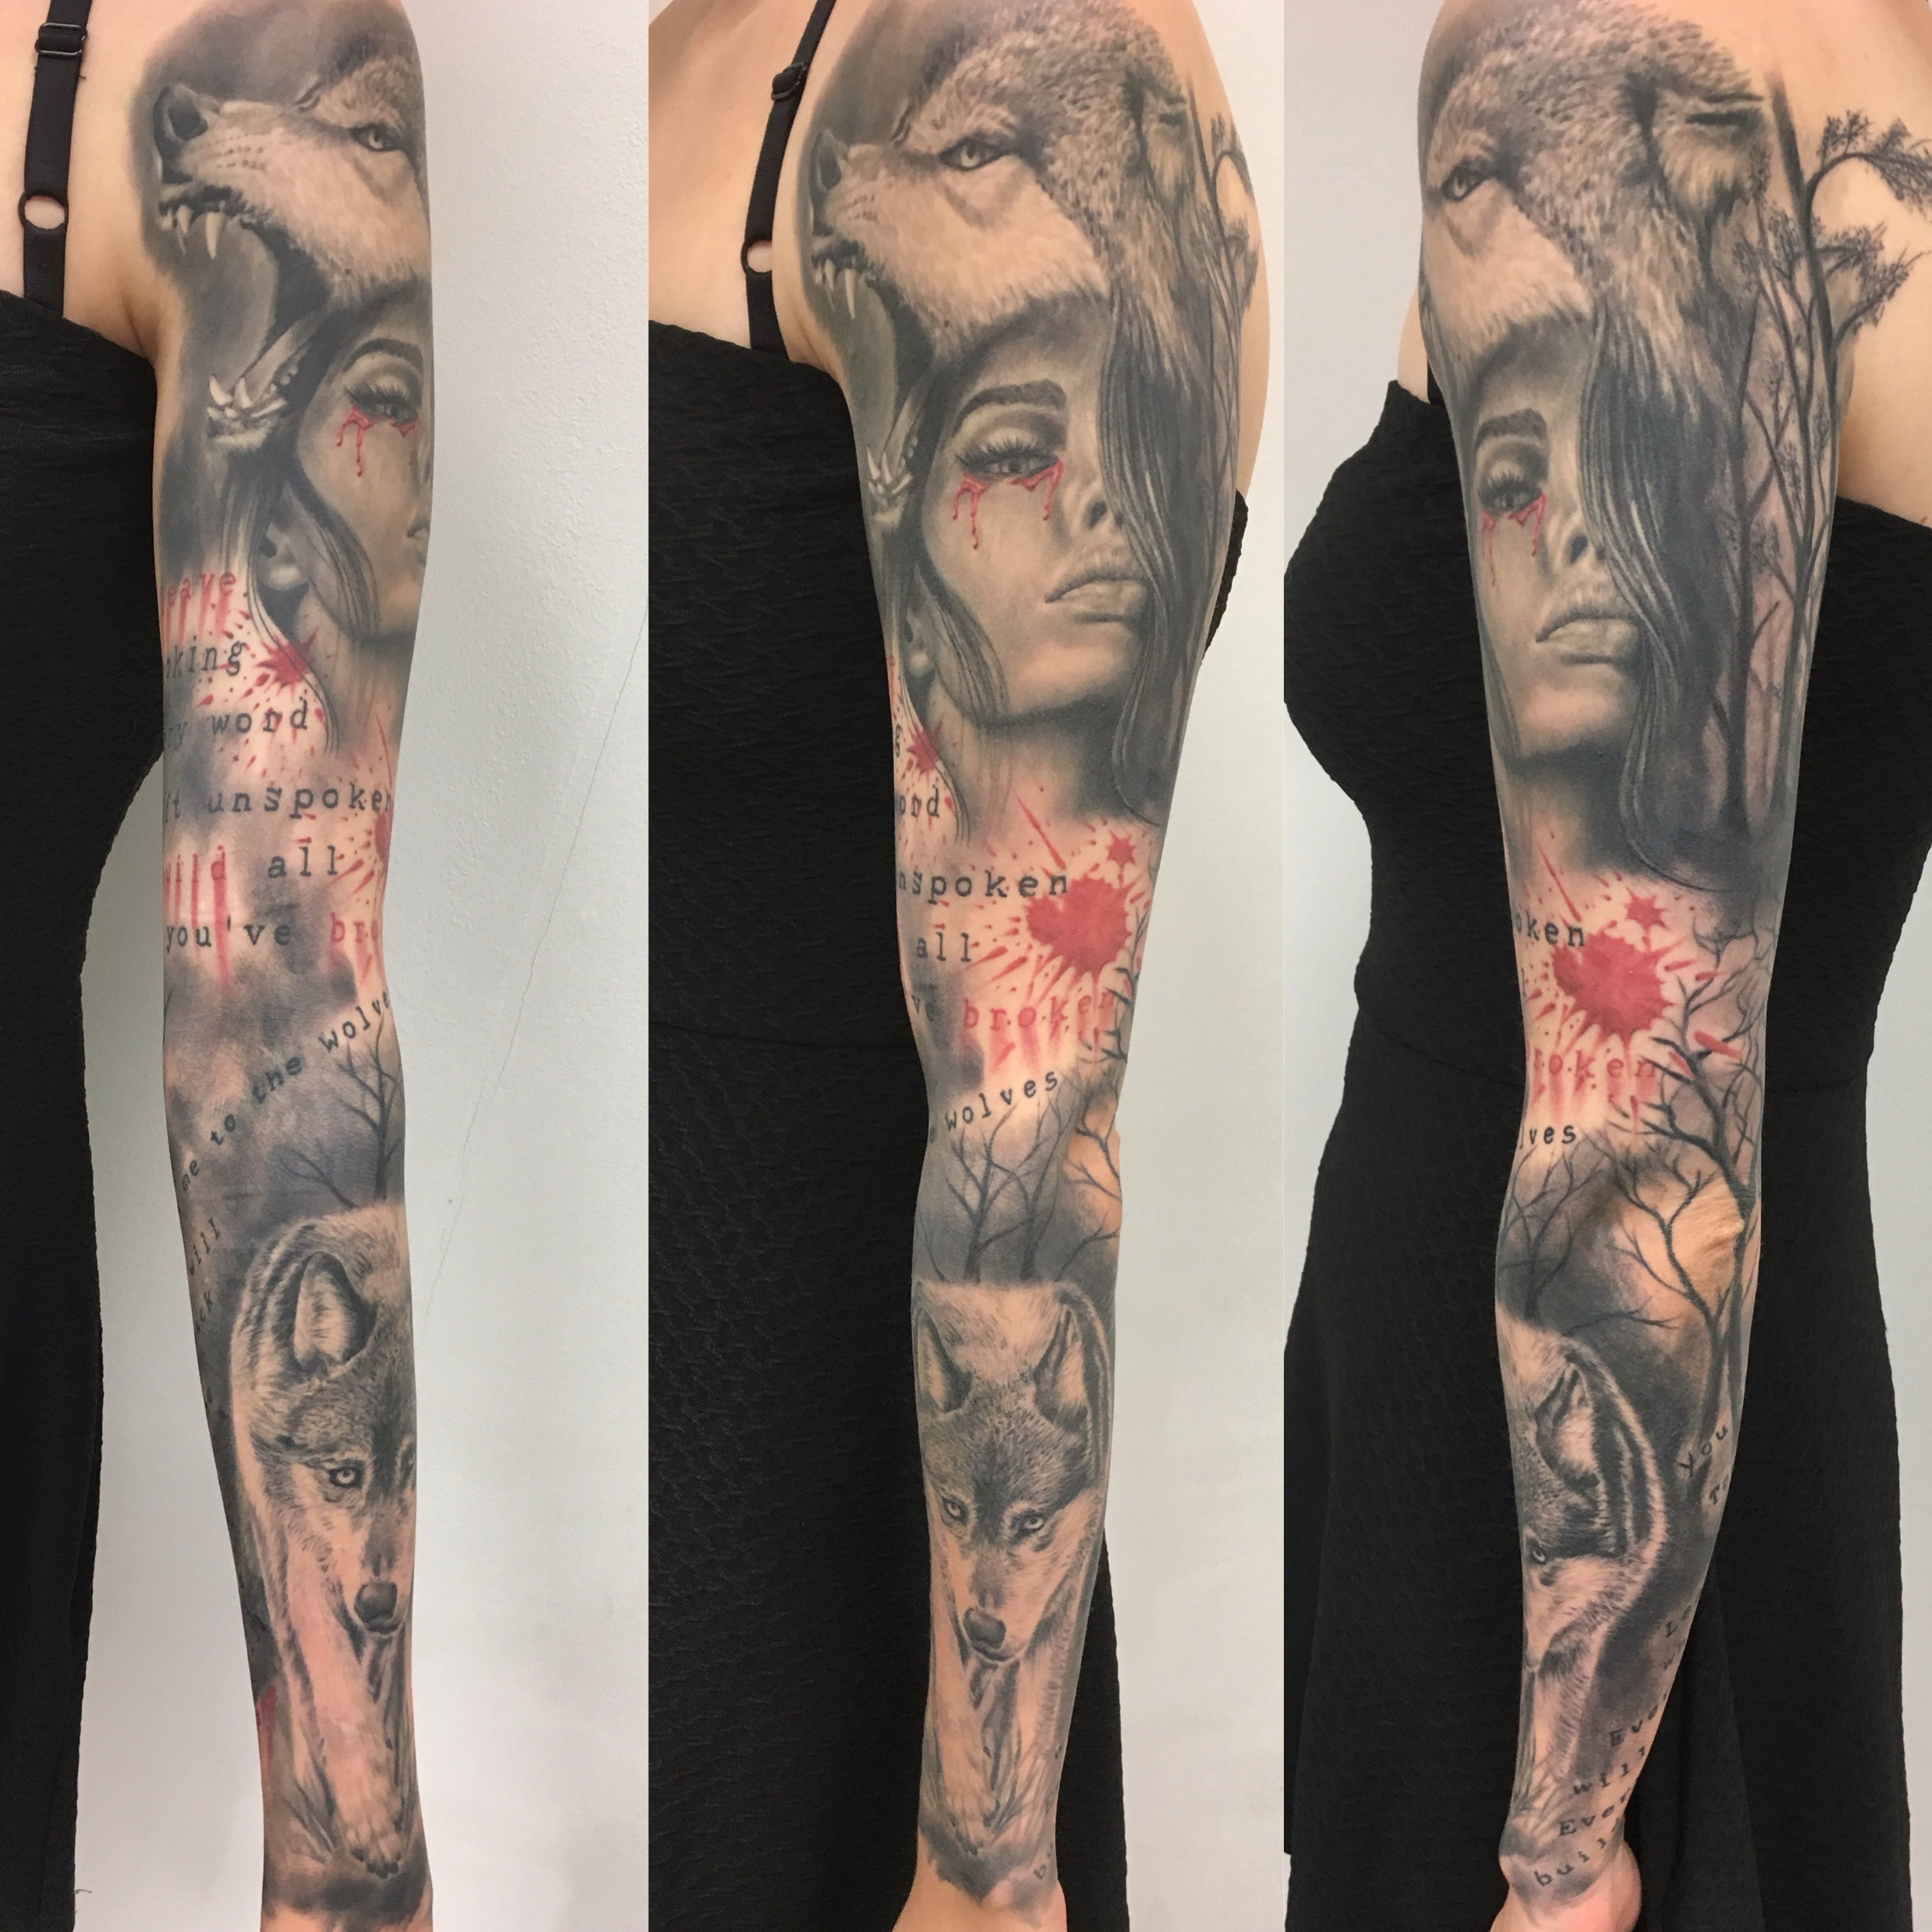 Frauen mit tattoo